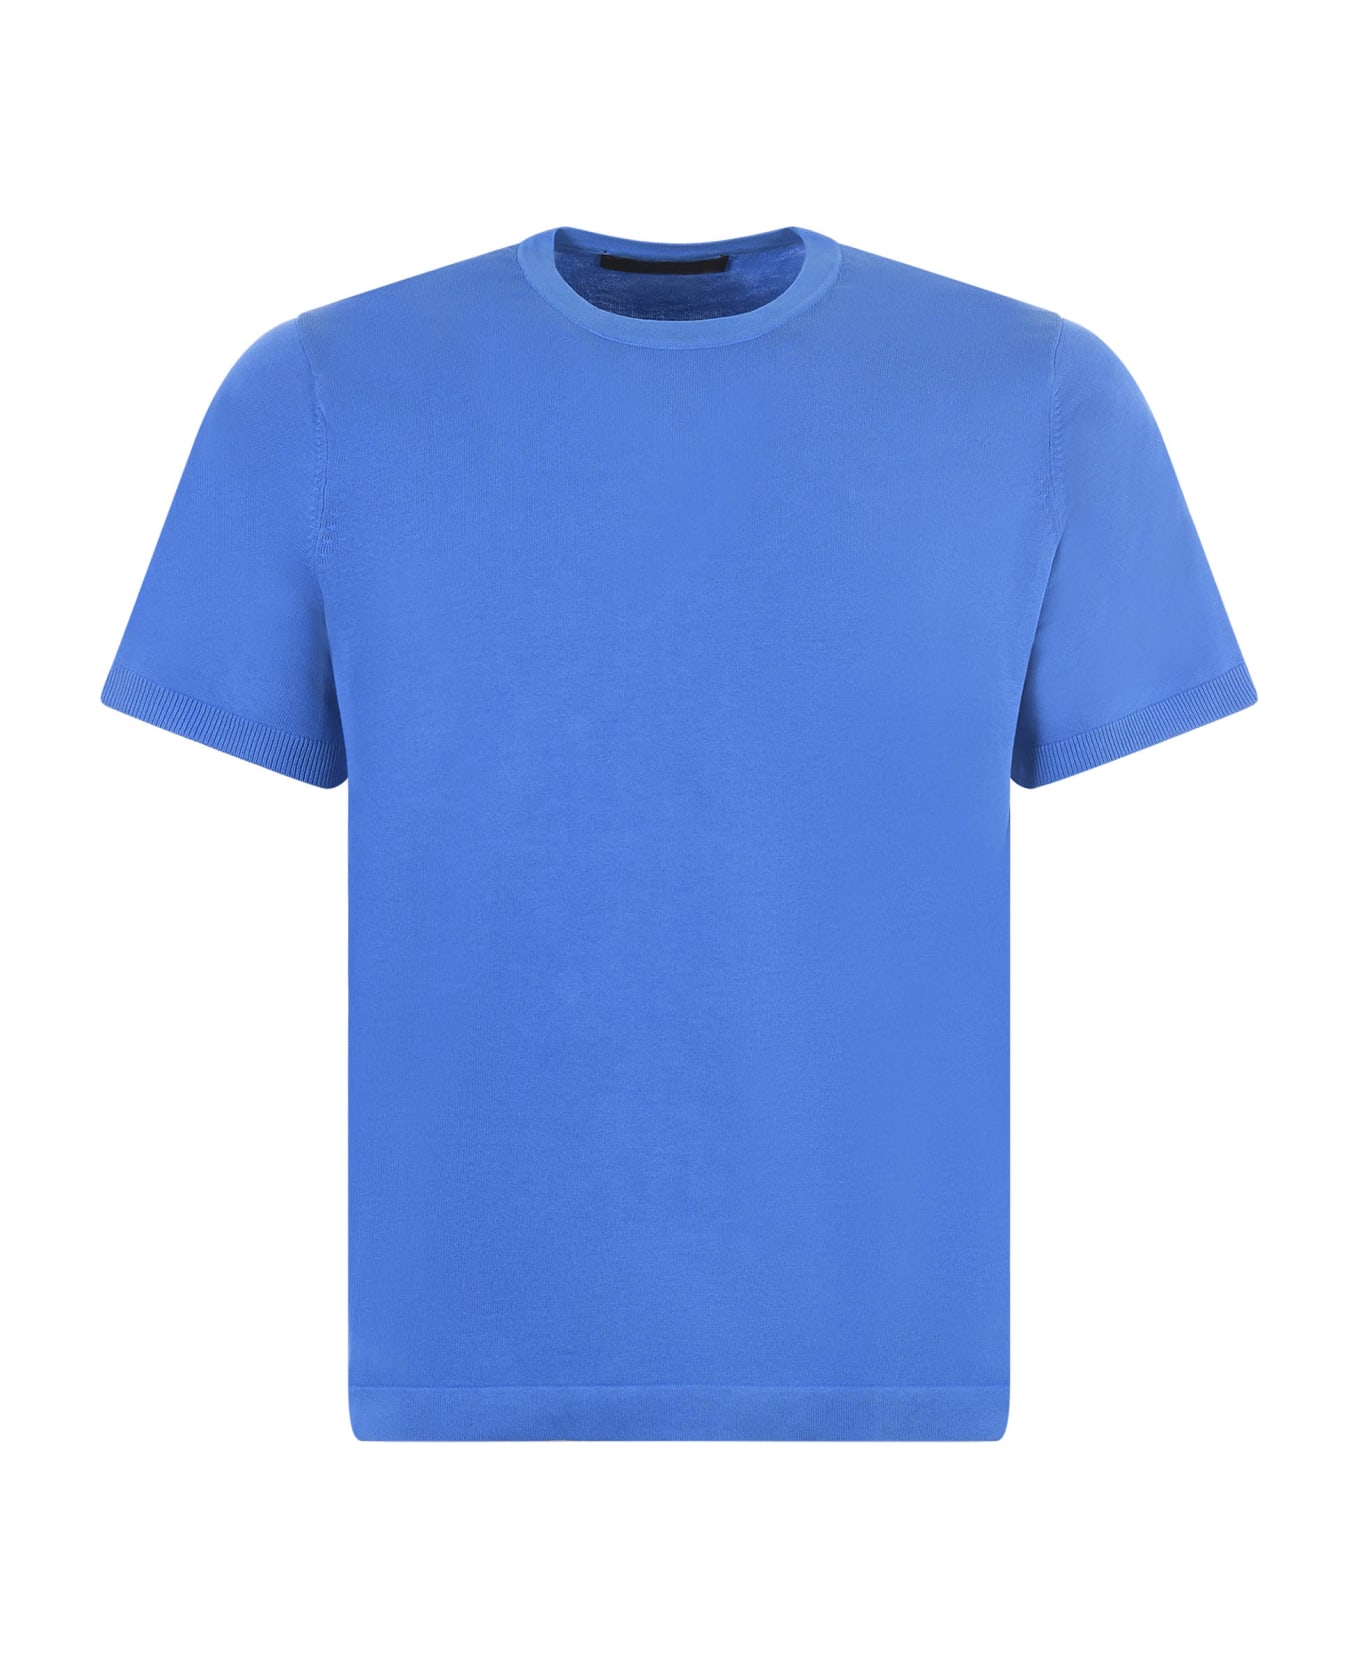 Jeordie's T-shirt - Azzurro シャツ